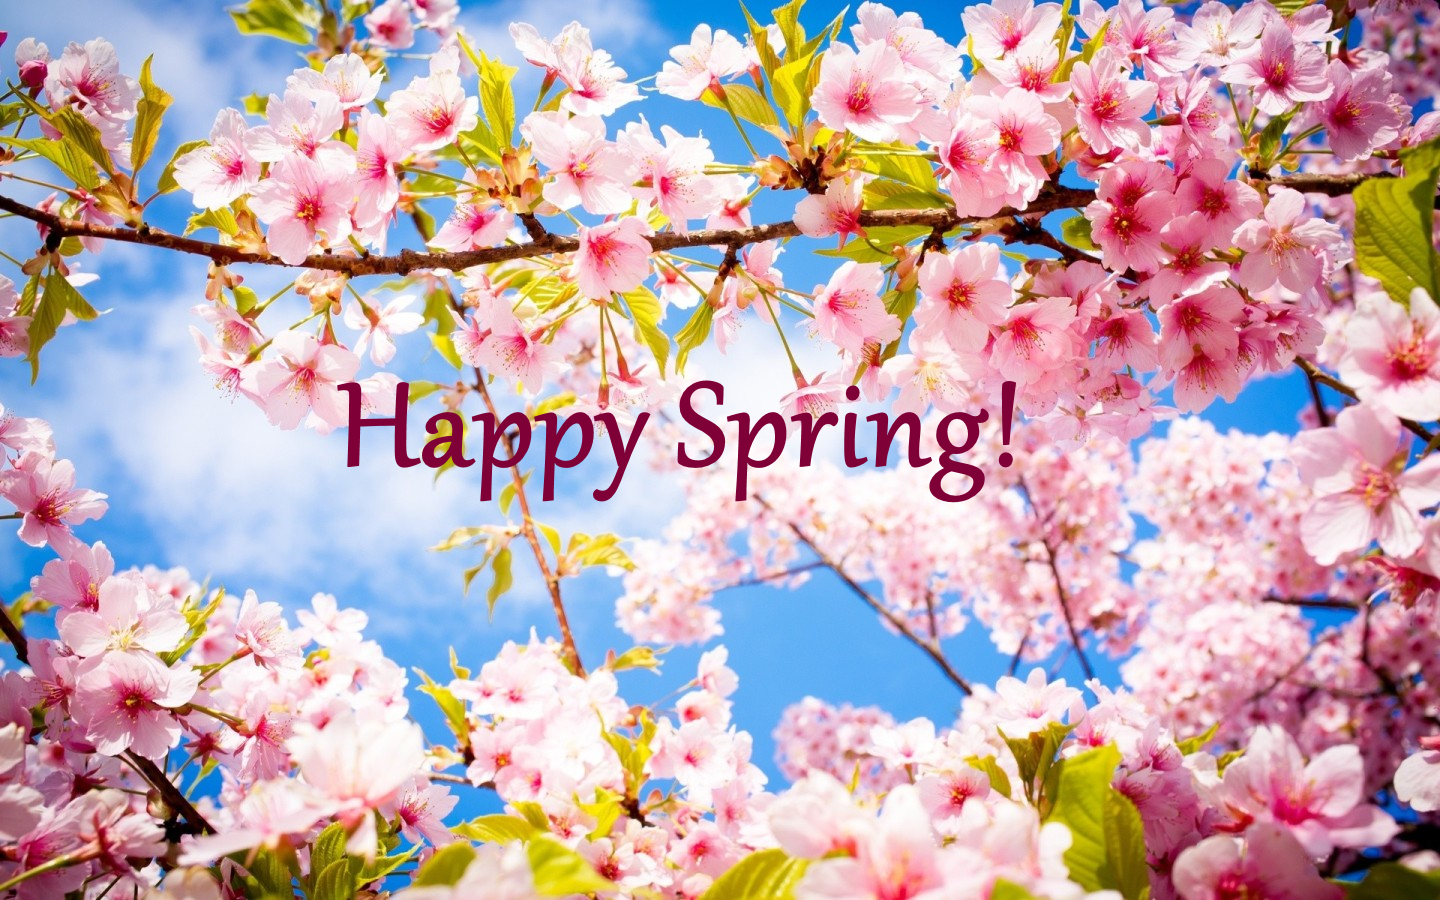 Natrunsfar: Happy Spring!!